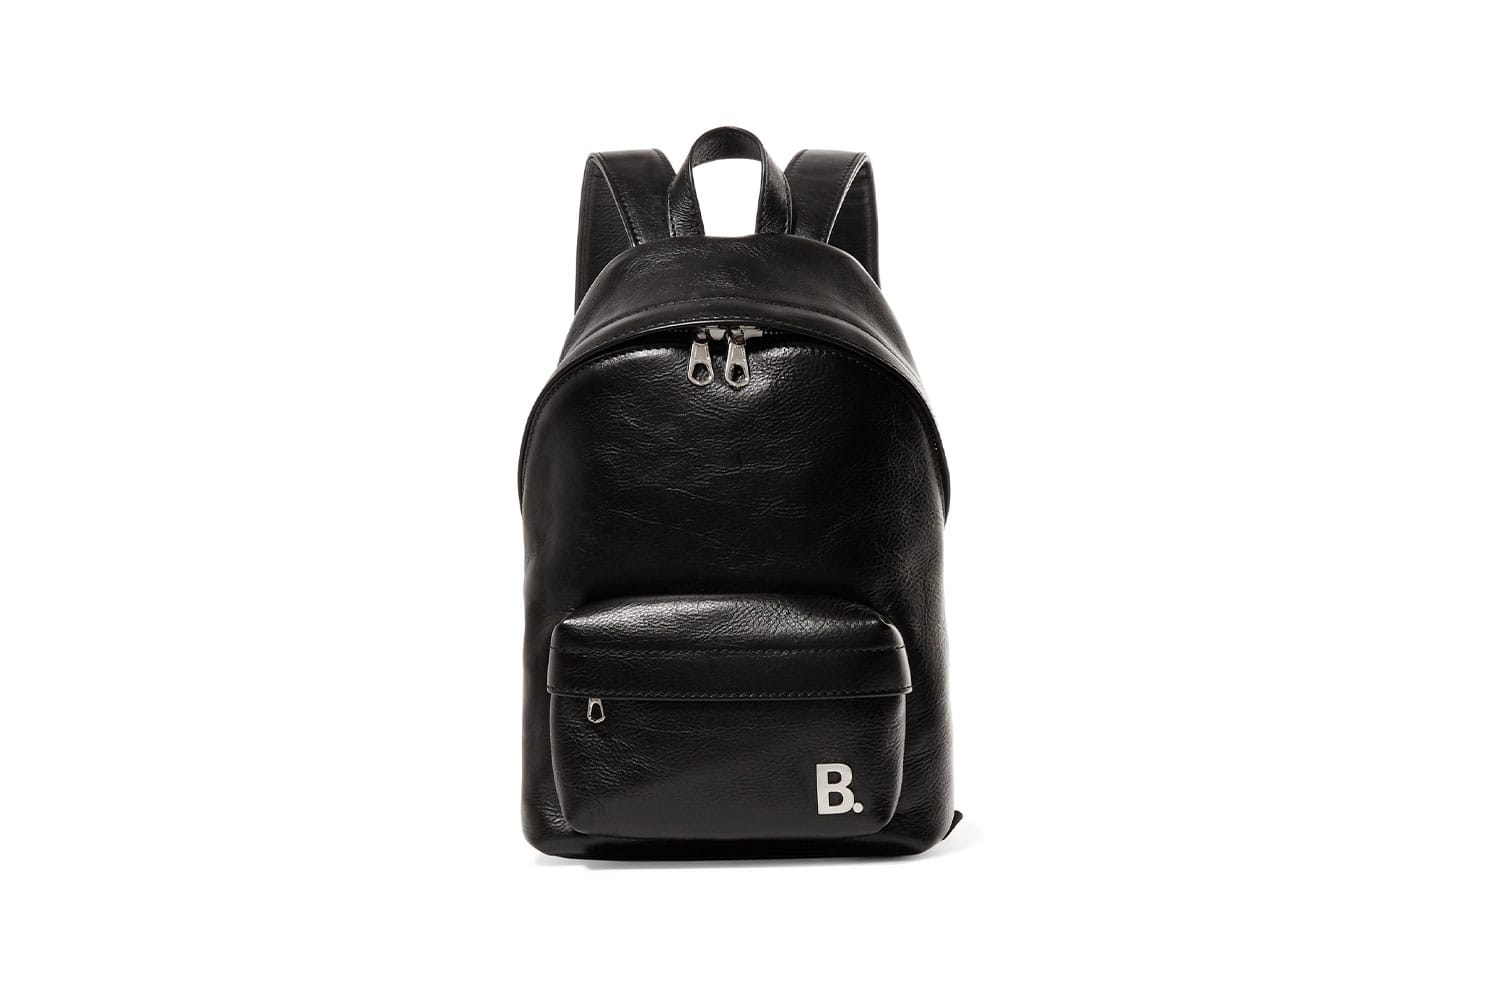 balenciaga backpack mini